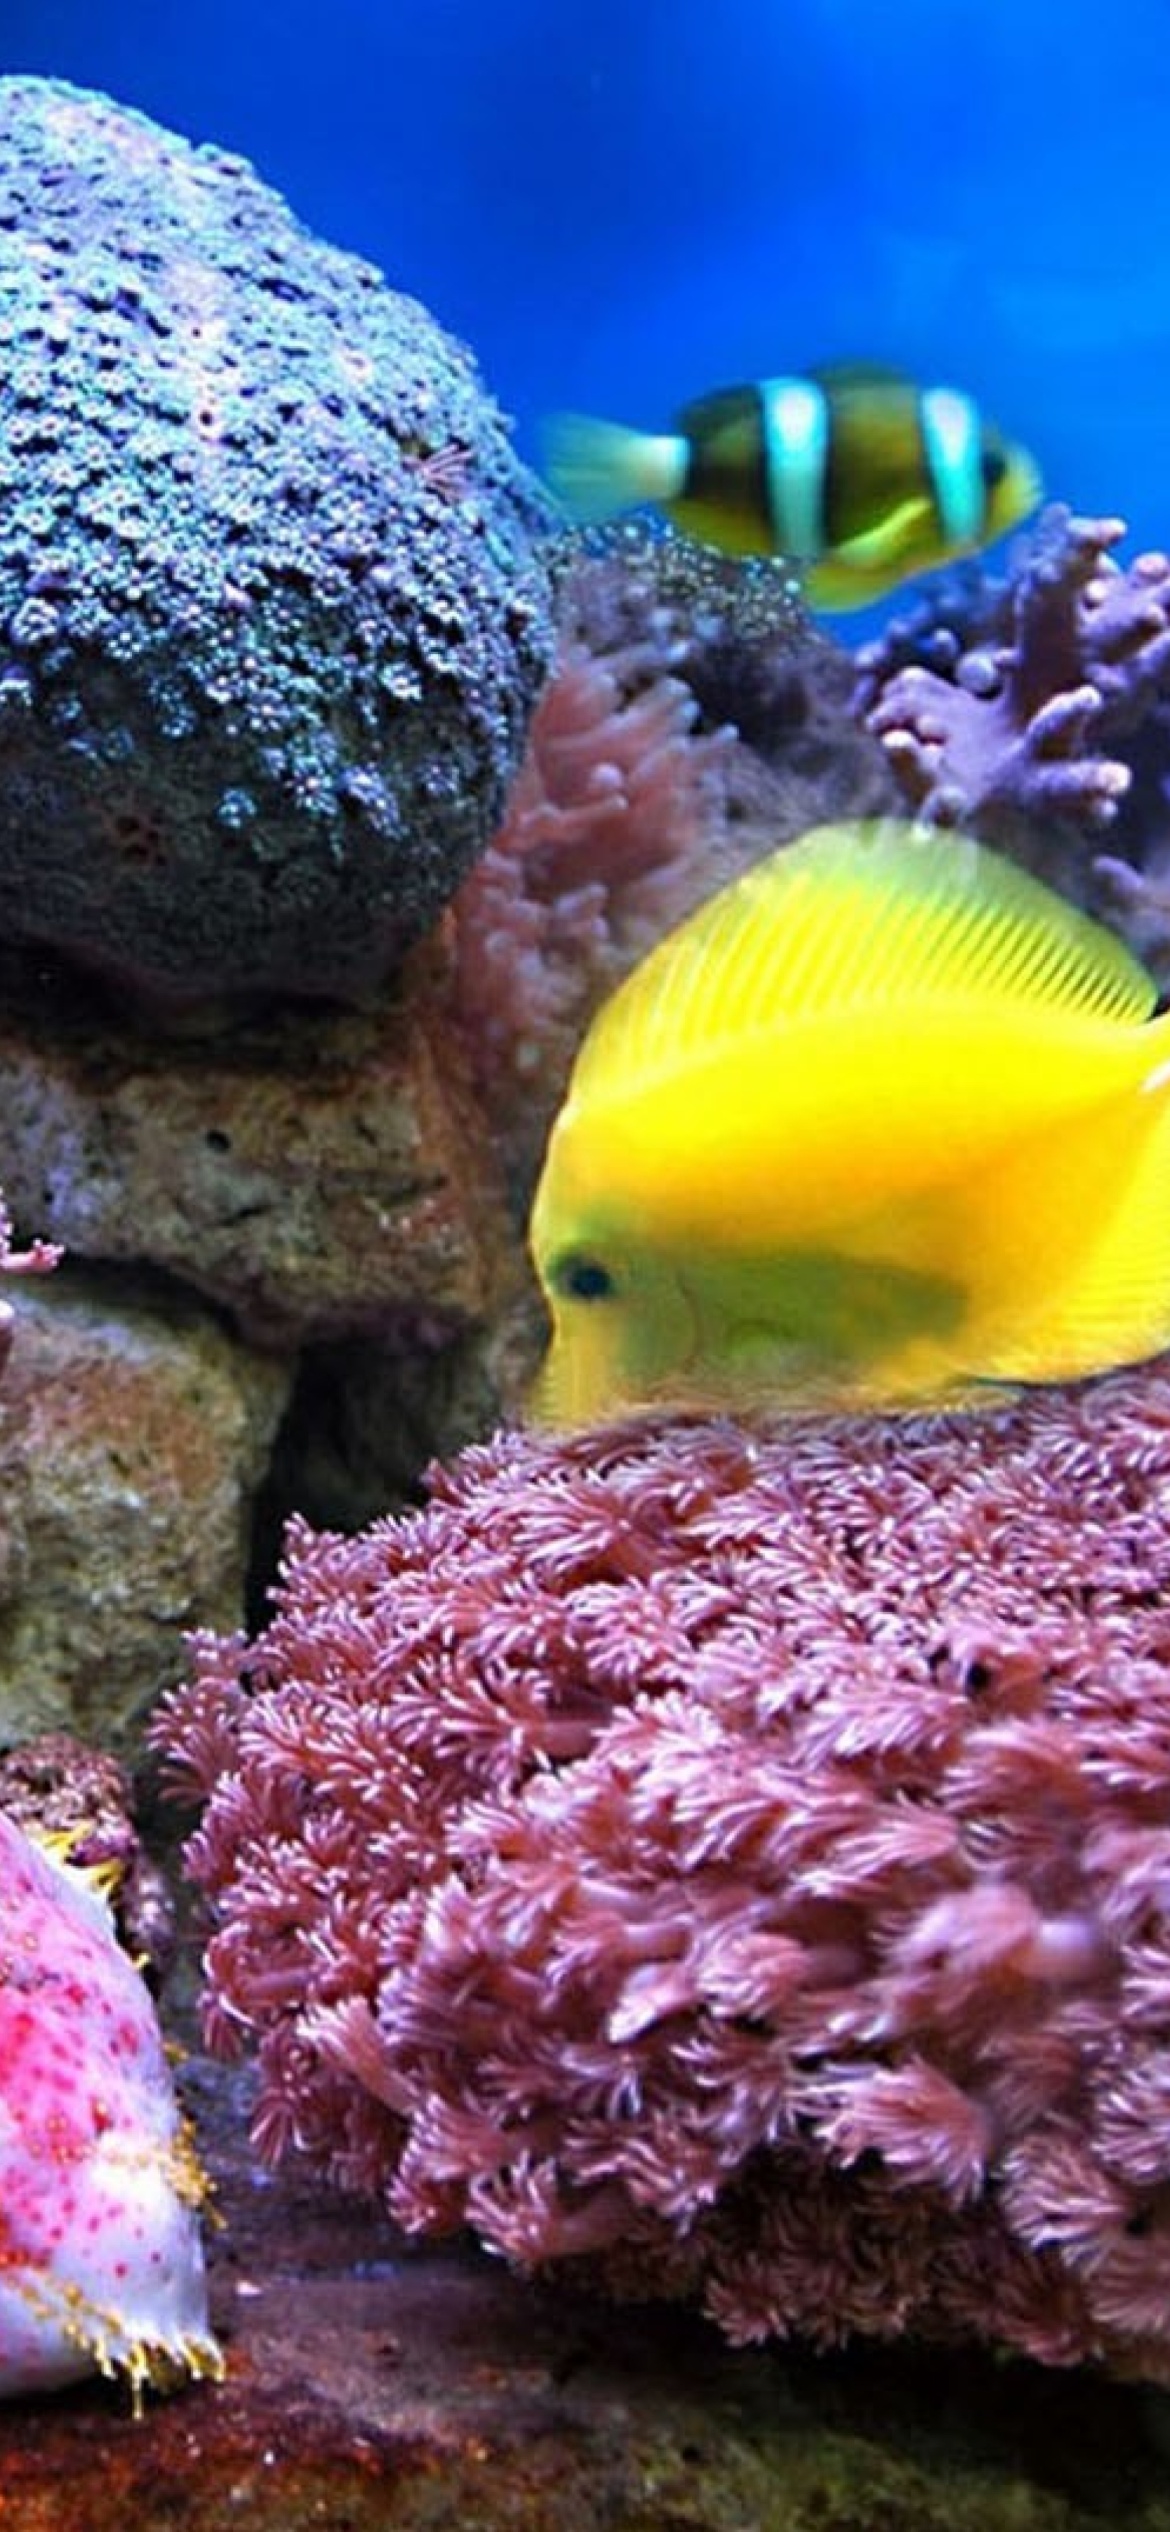 Обои Colorful marine fishes in aquarium 1170x2532